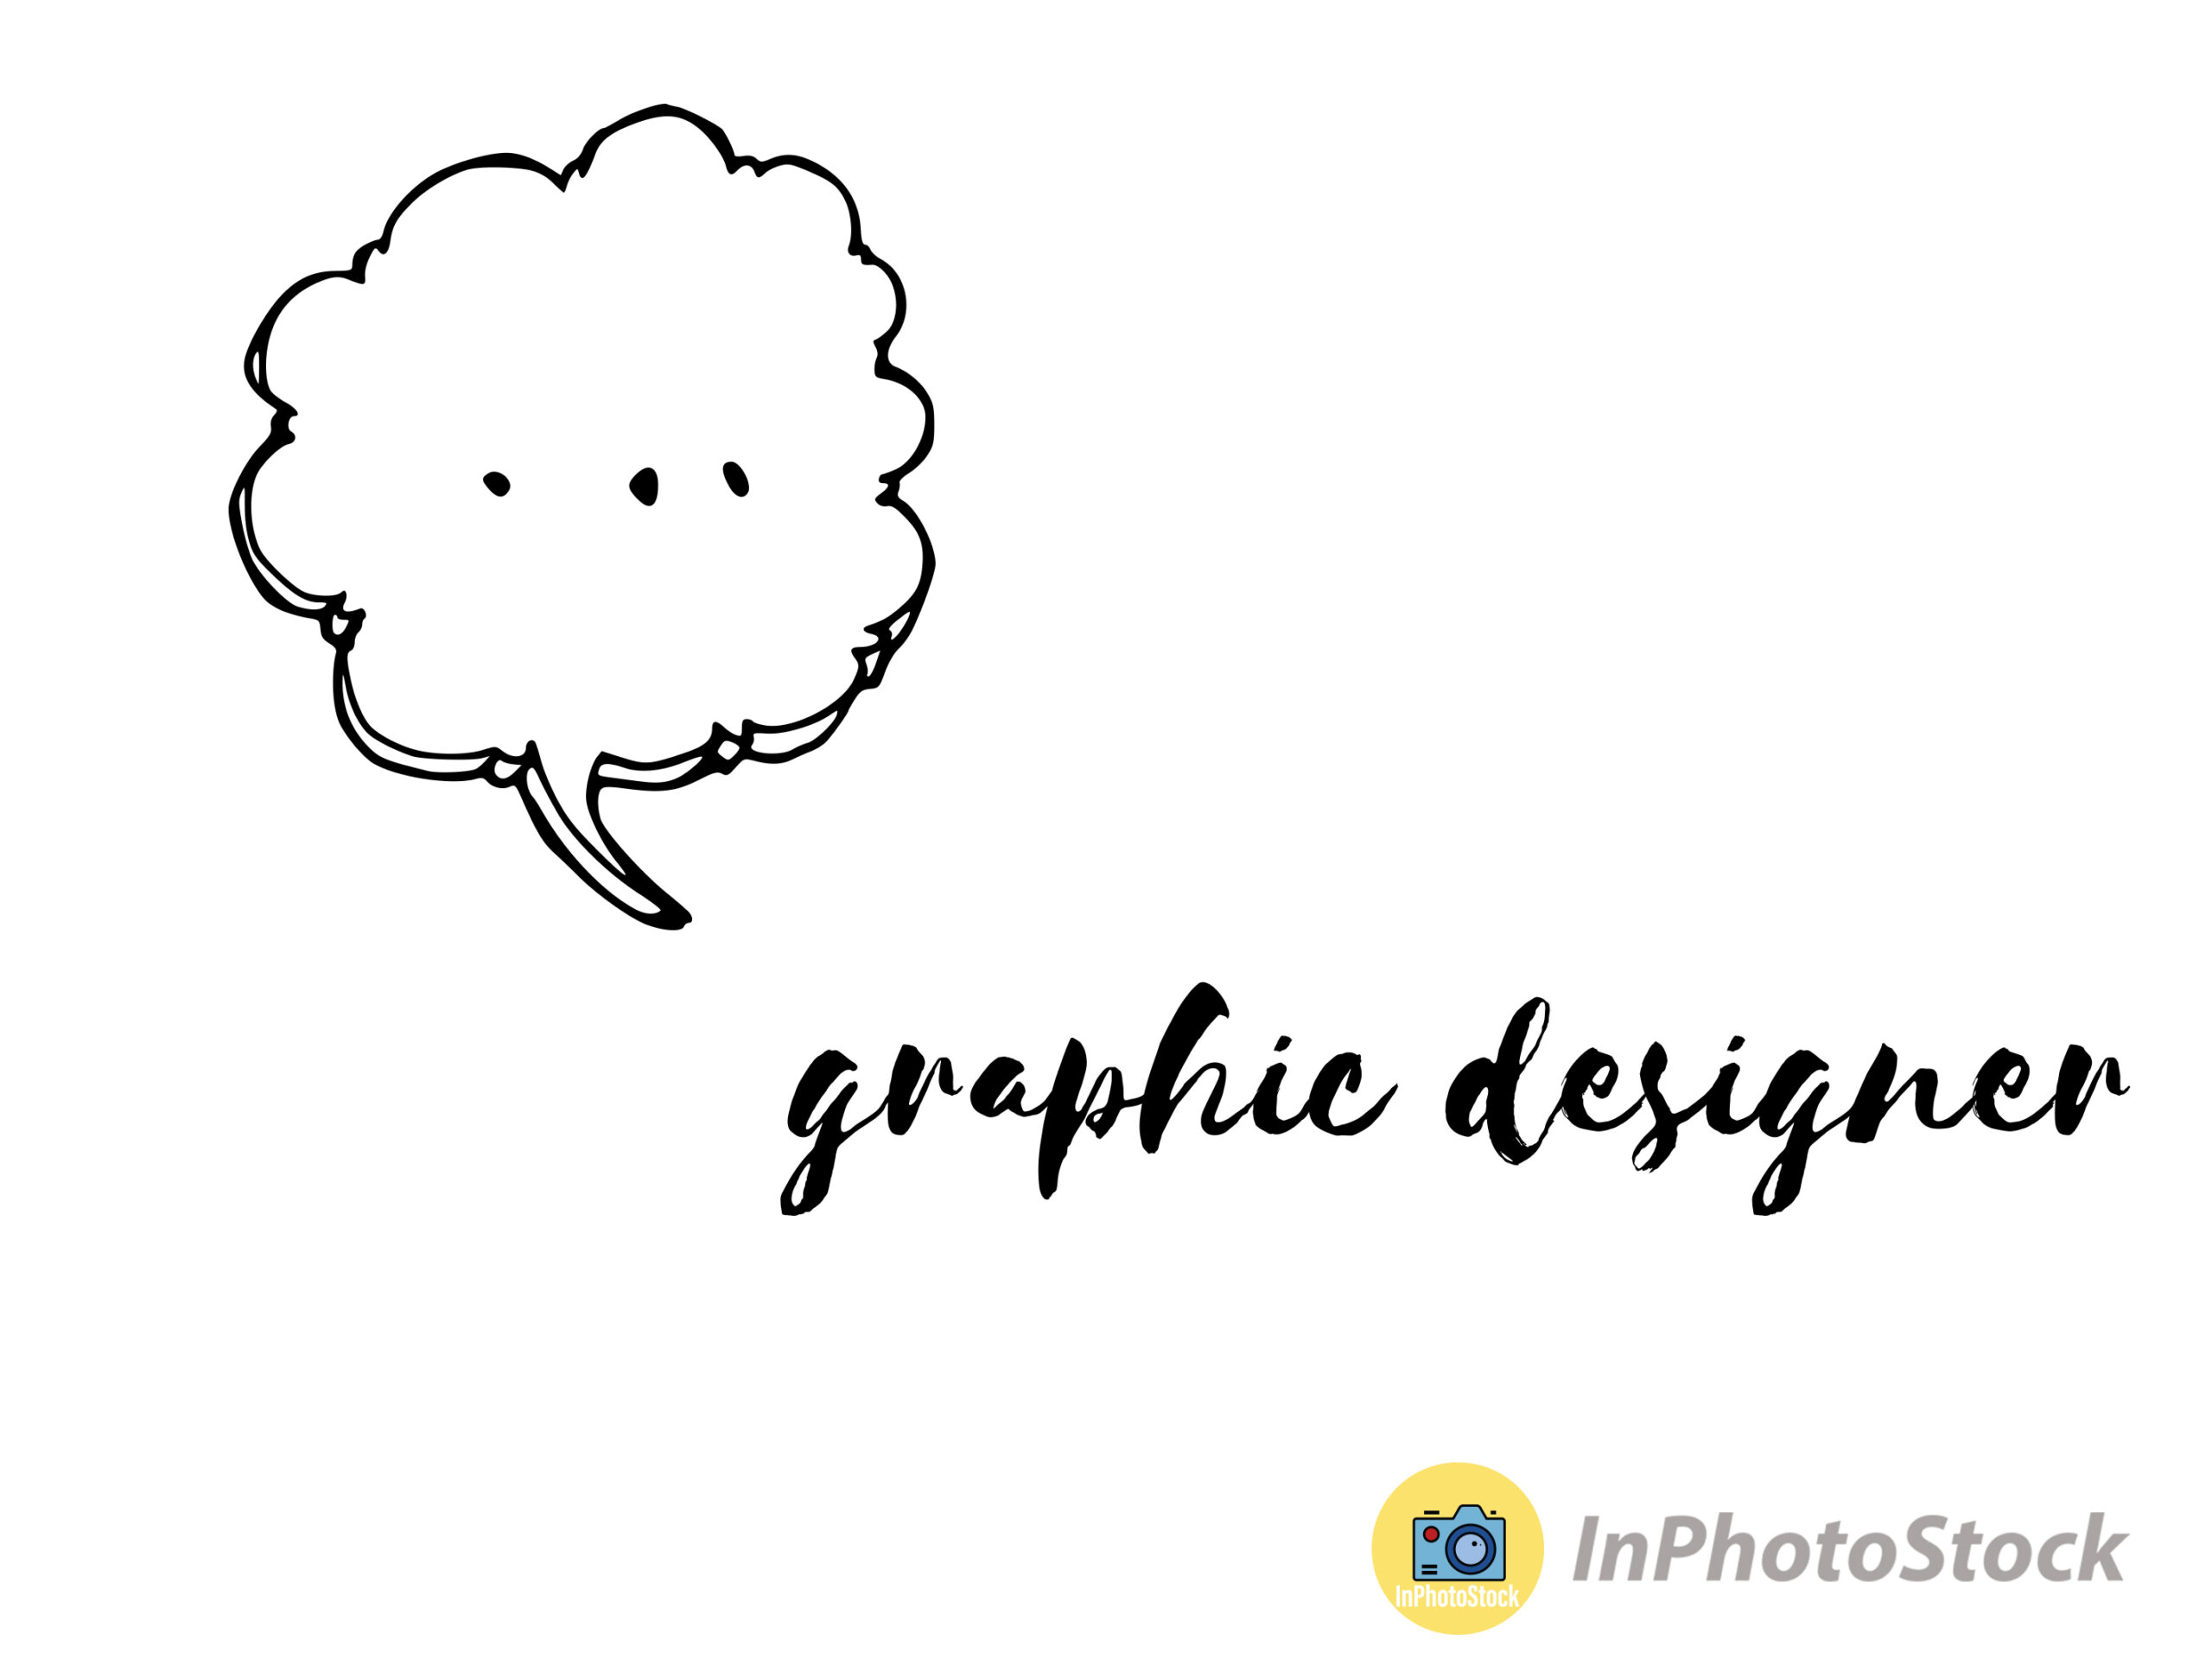 A guide for a beginner graphic designer